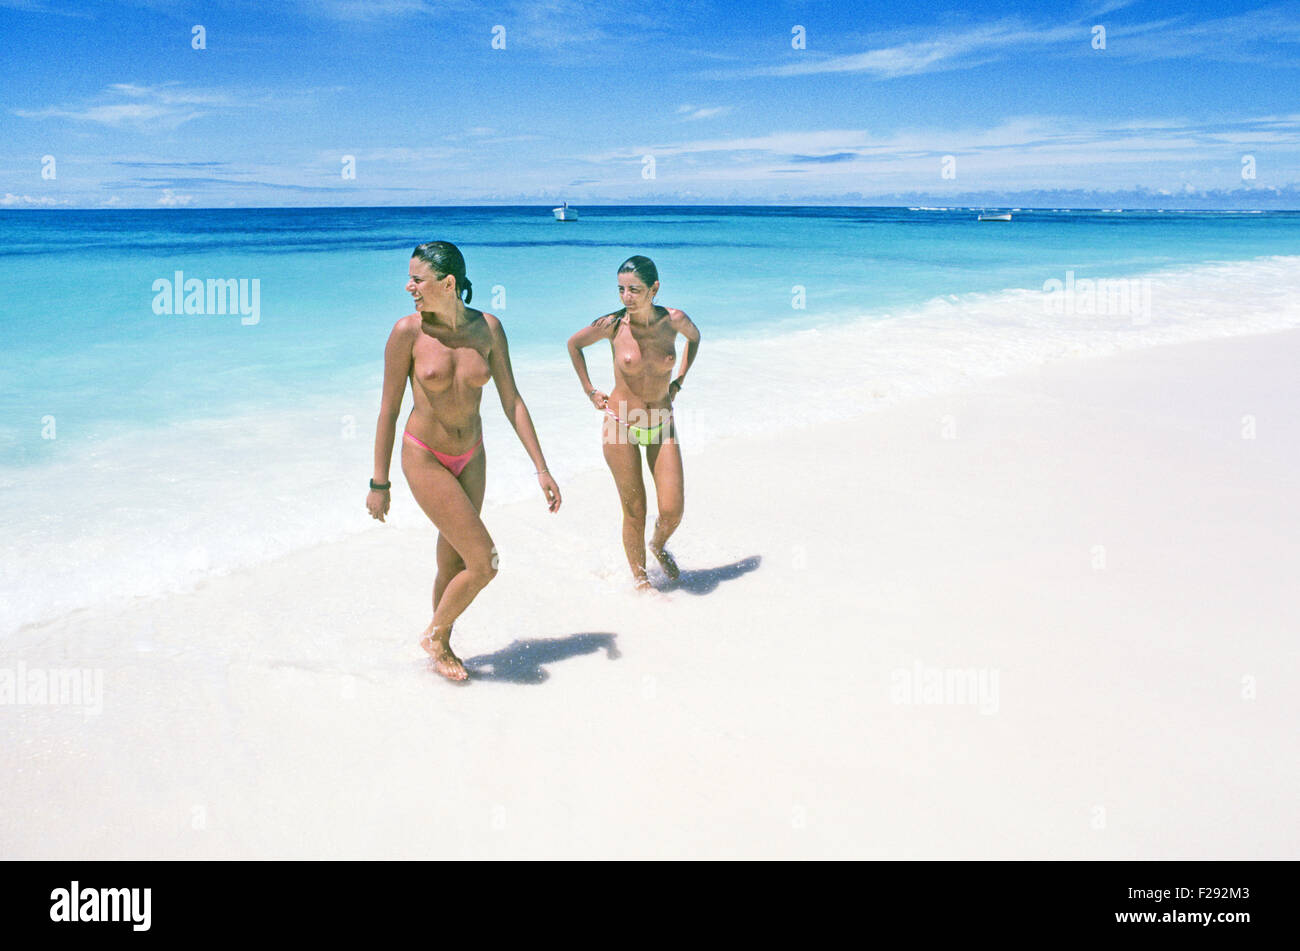 Nude beaches naked women